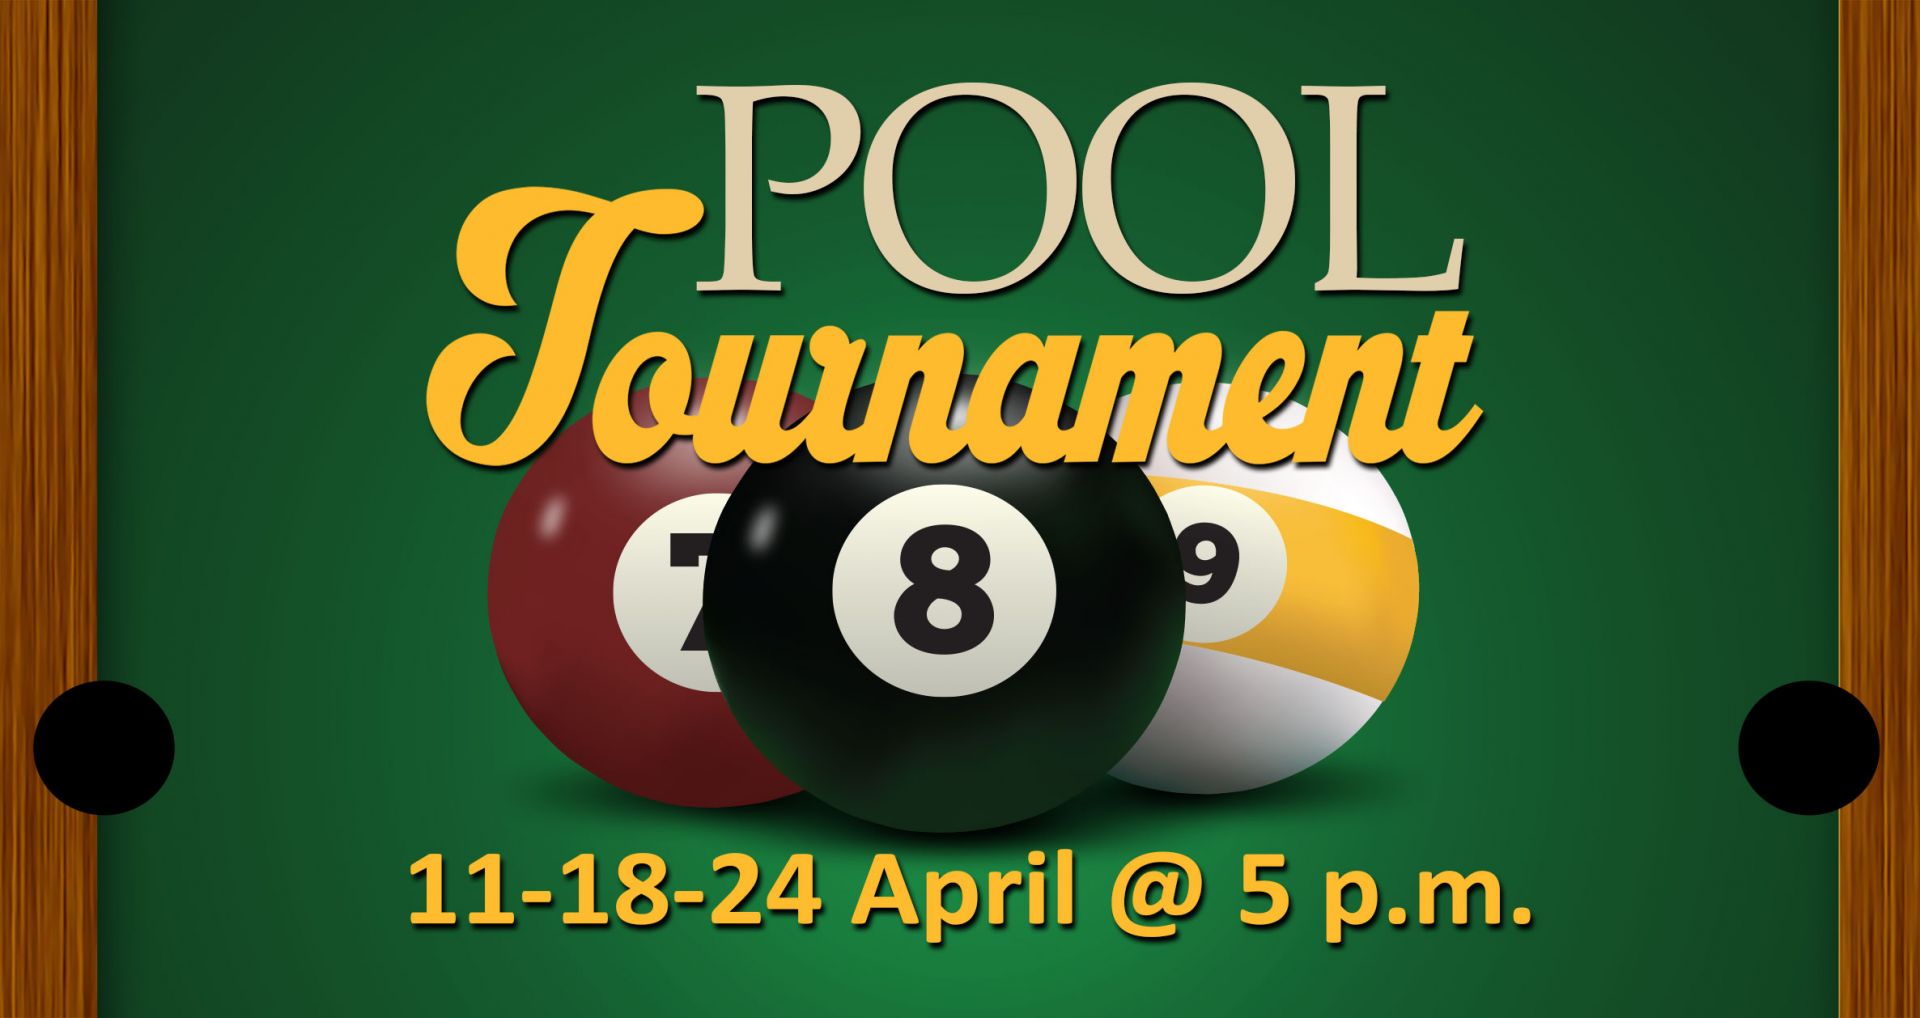 Pool Tournament 11-18-24 April